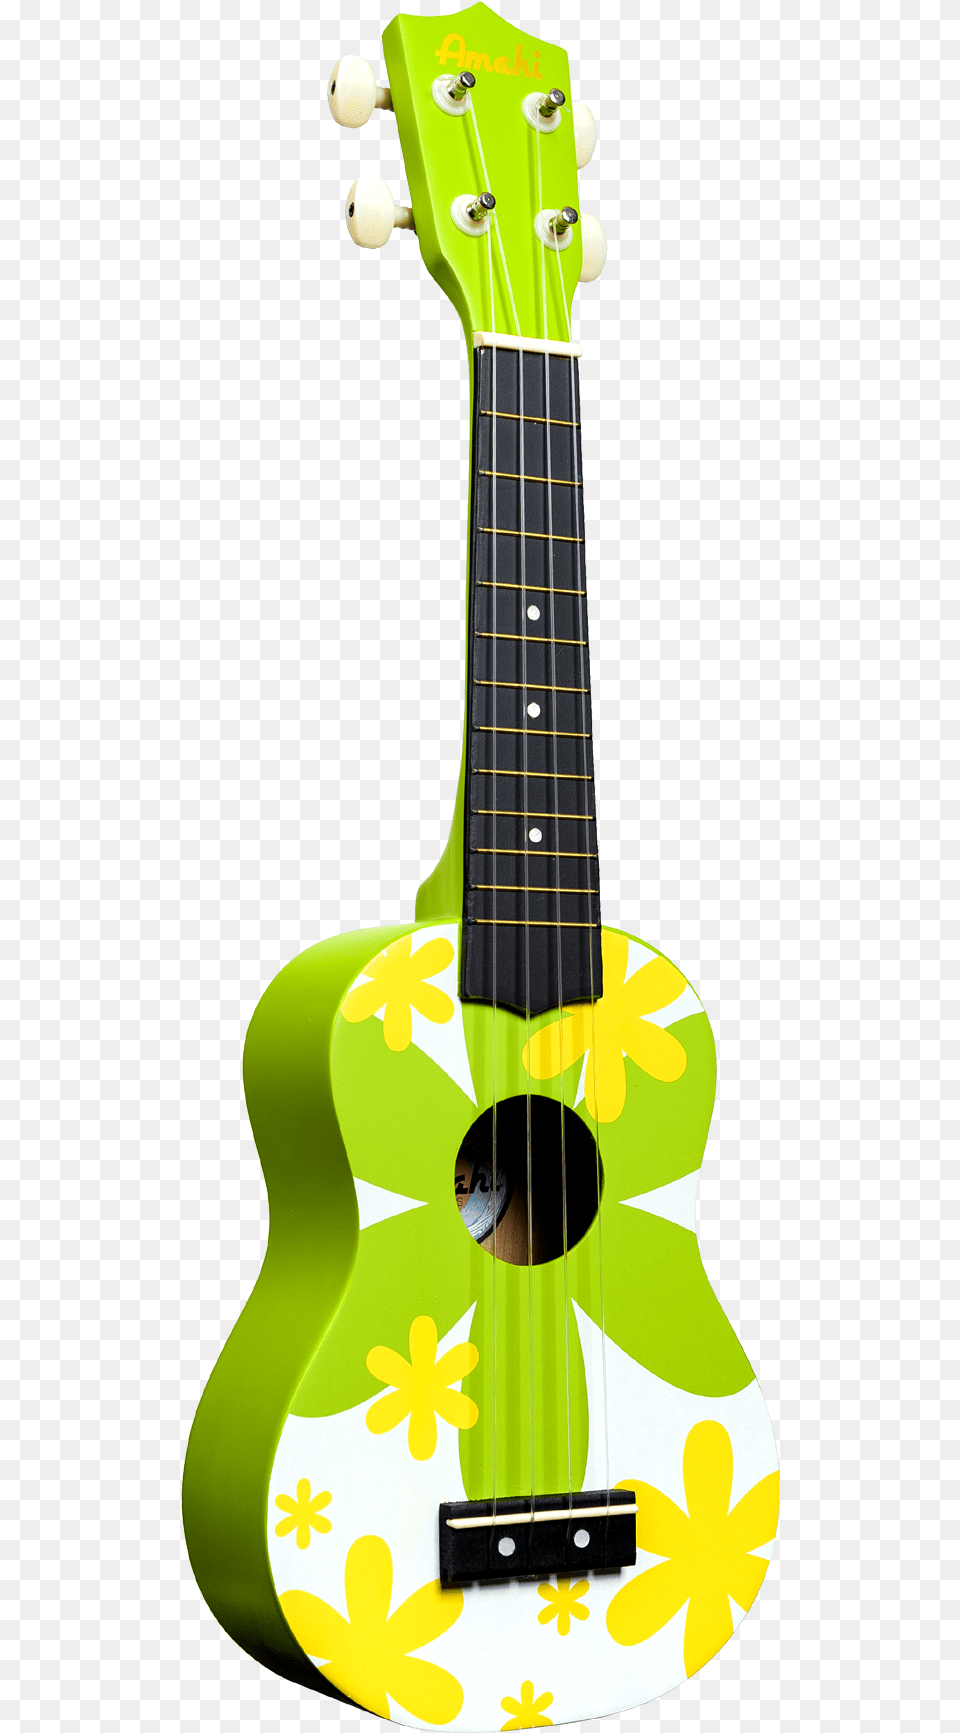 Green Flower Ukulele, Bass Guitar, Guitar, Musical Instrument Png Image